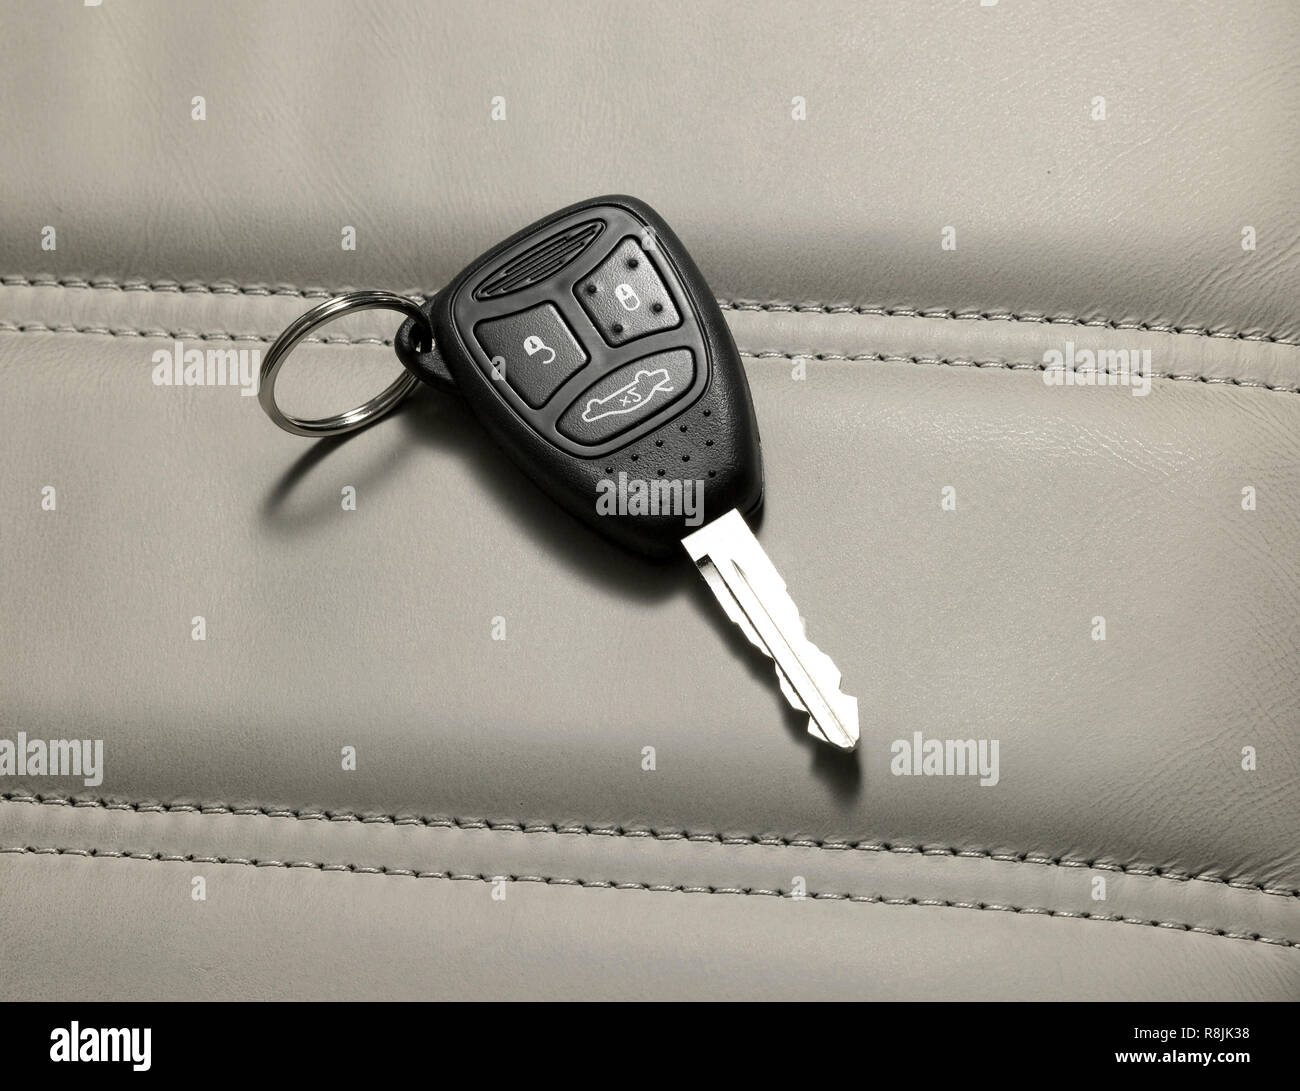 Car Keys on Leather seats Stock Photo